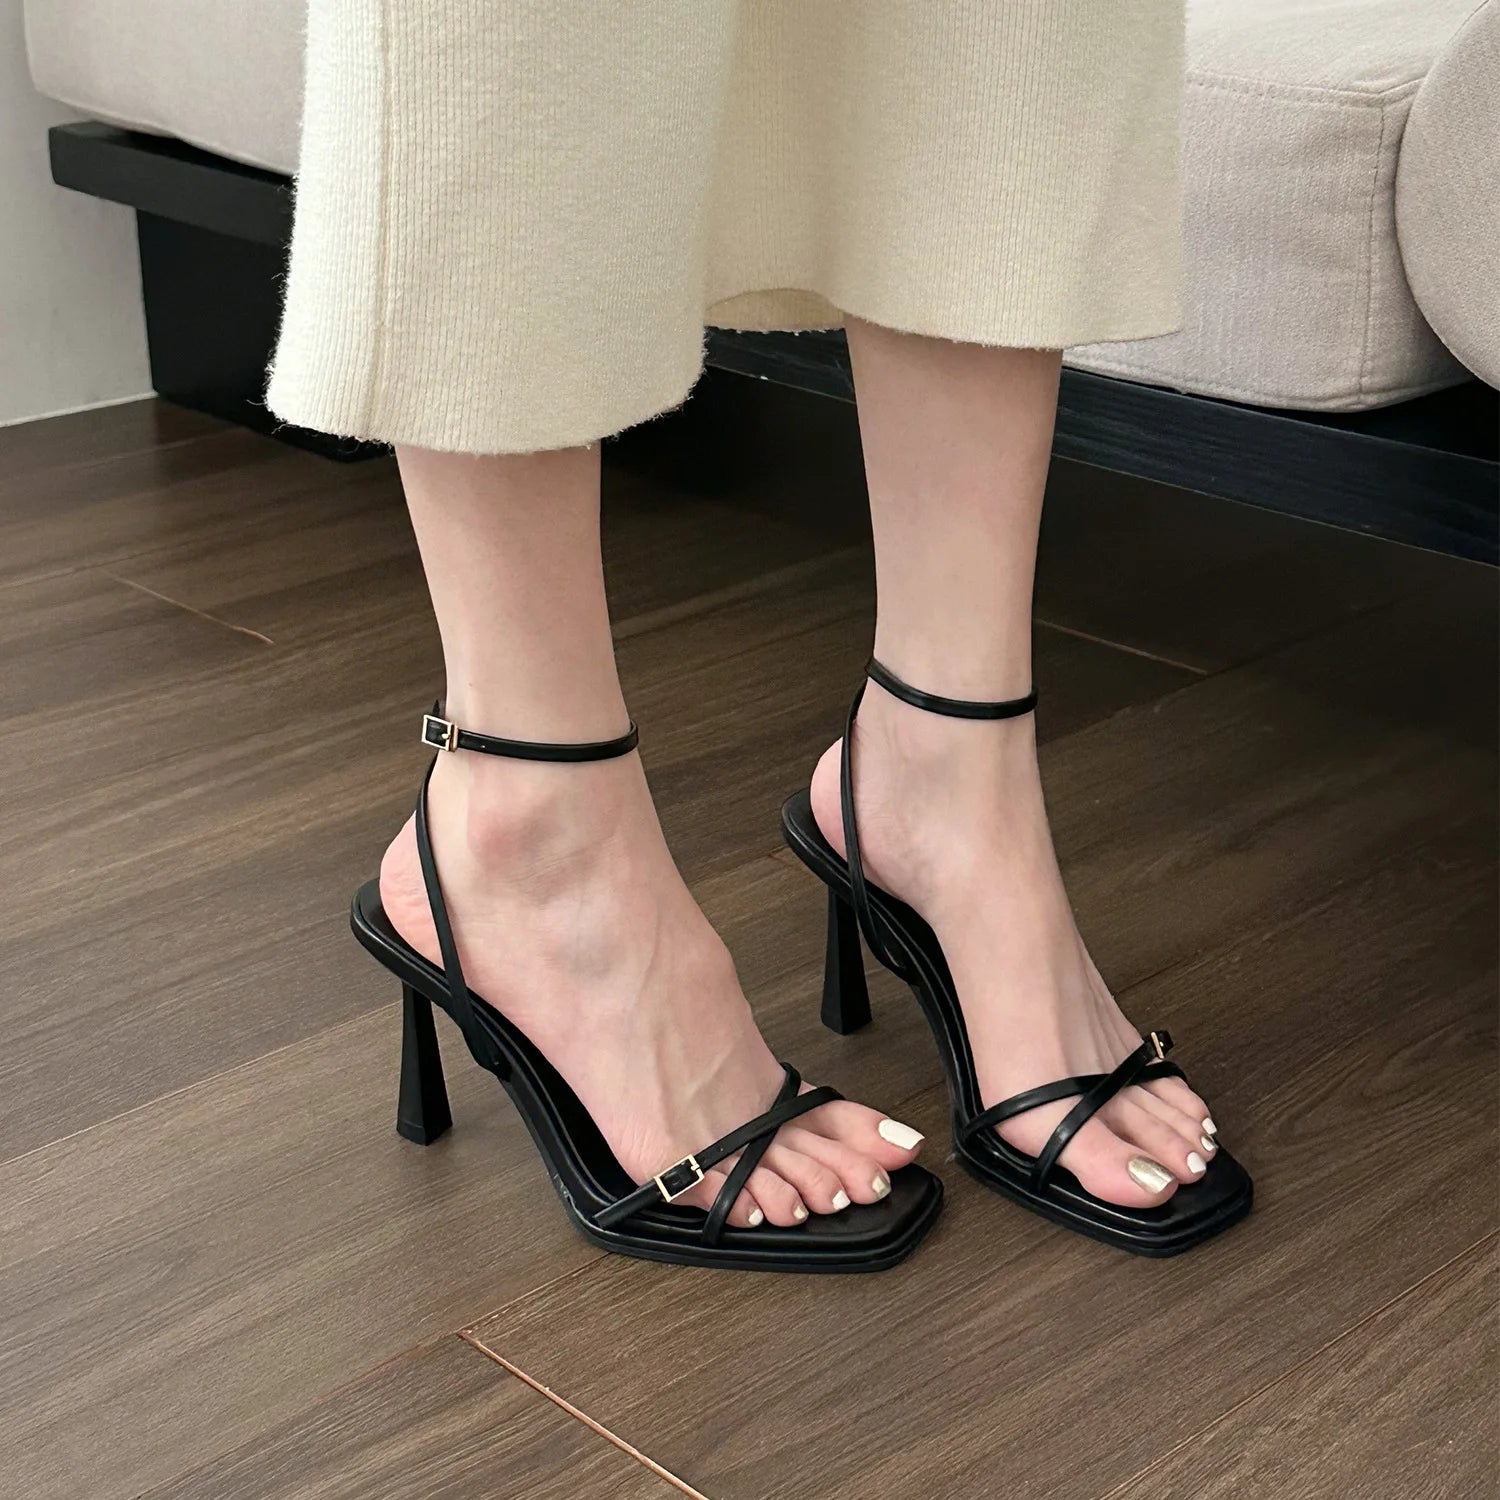 LIZAKOSHT -  New Summer Square Toe Sandals for Women Elegant Party Thin Strap High Heels Ladies Buckle Sandal Female White Black Shoes